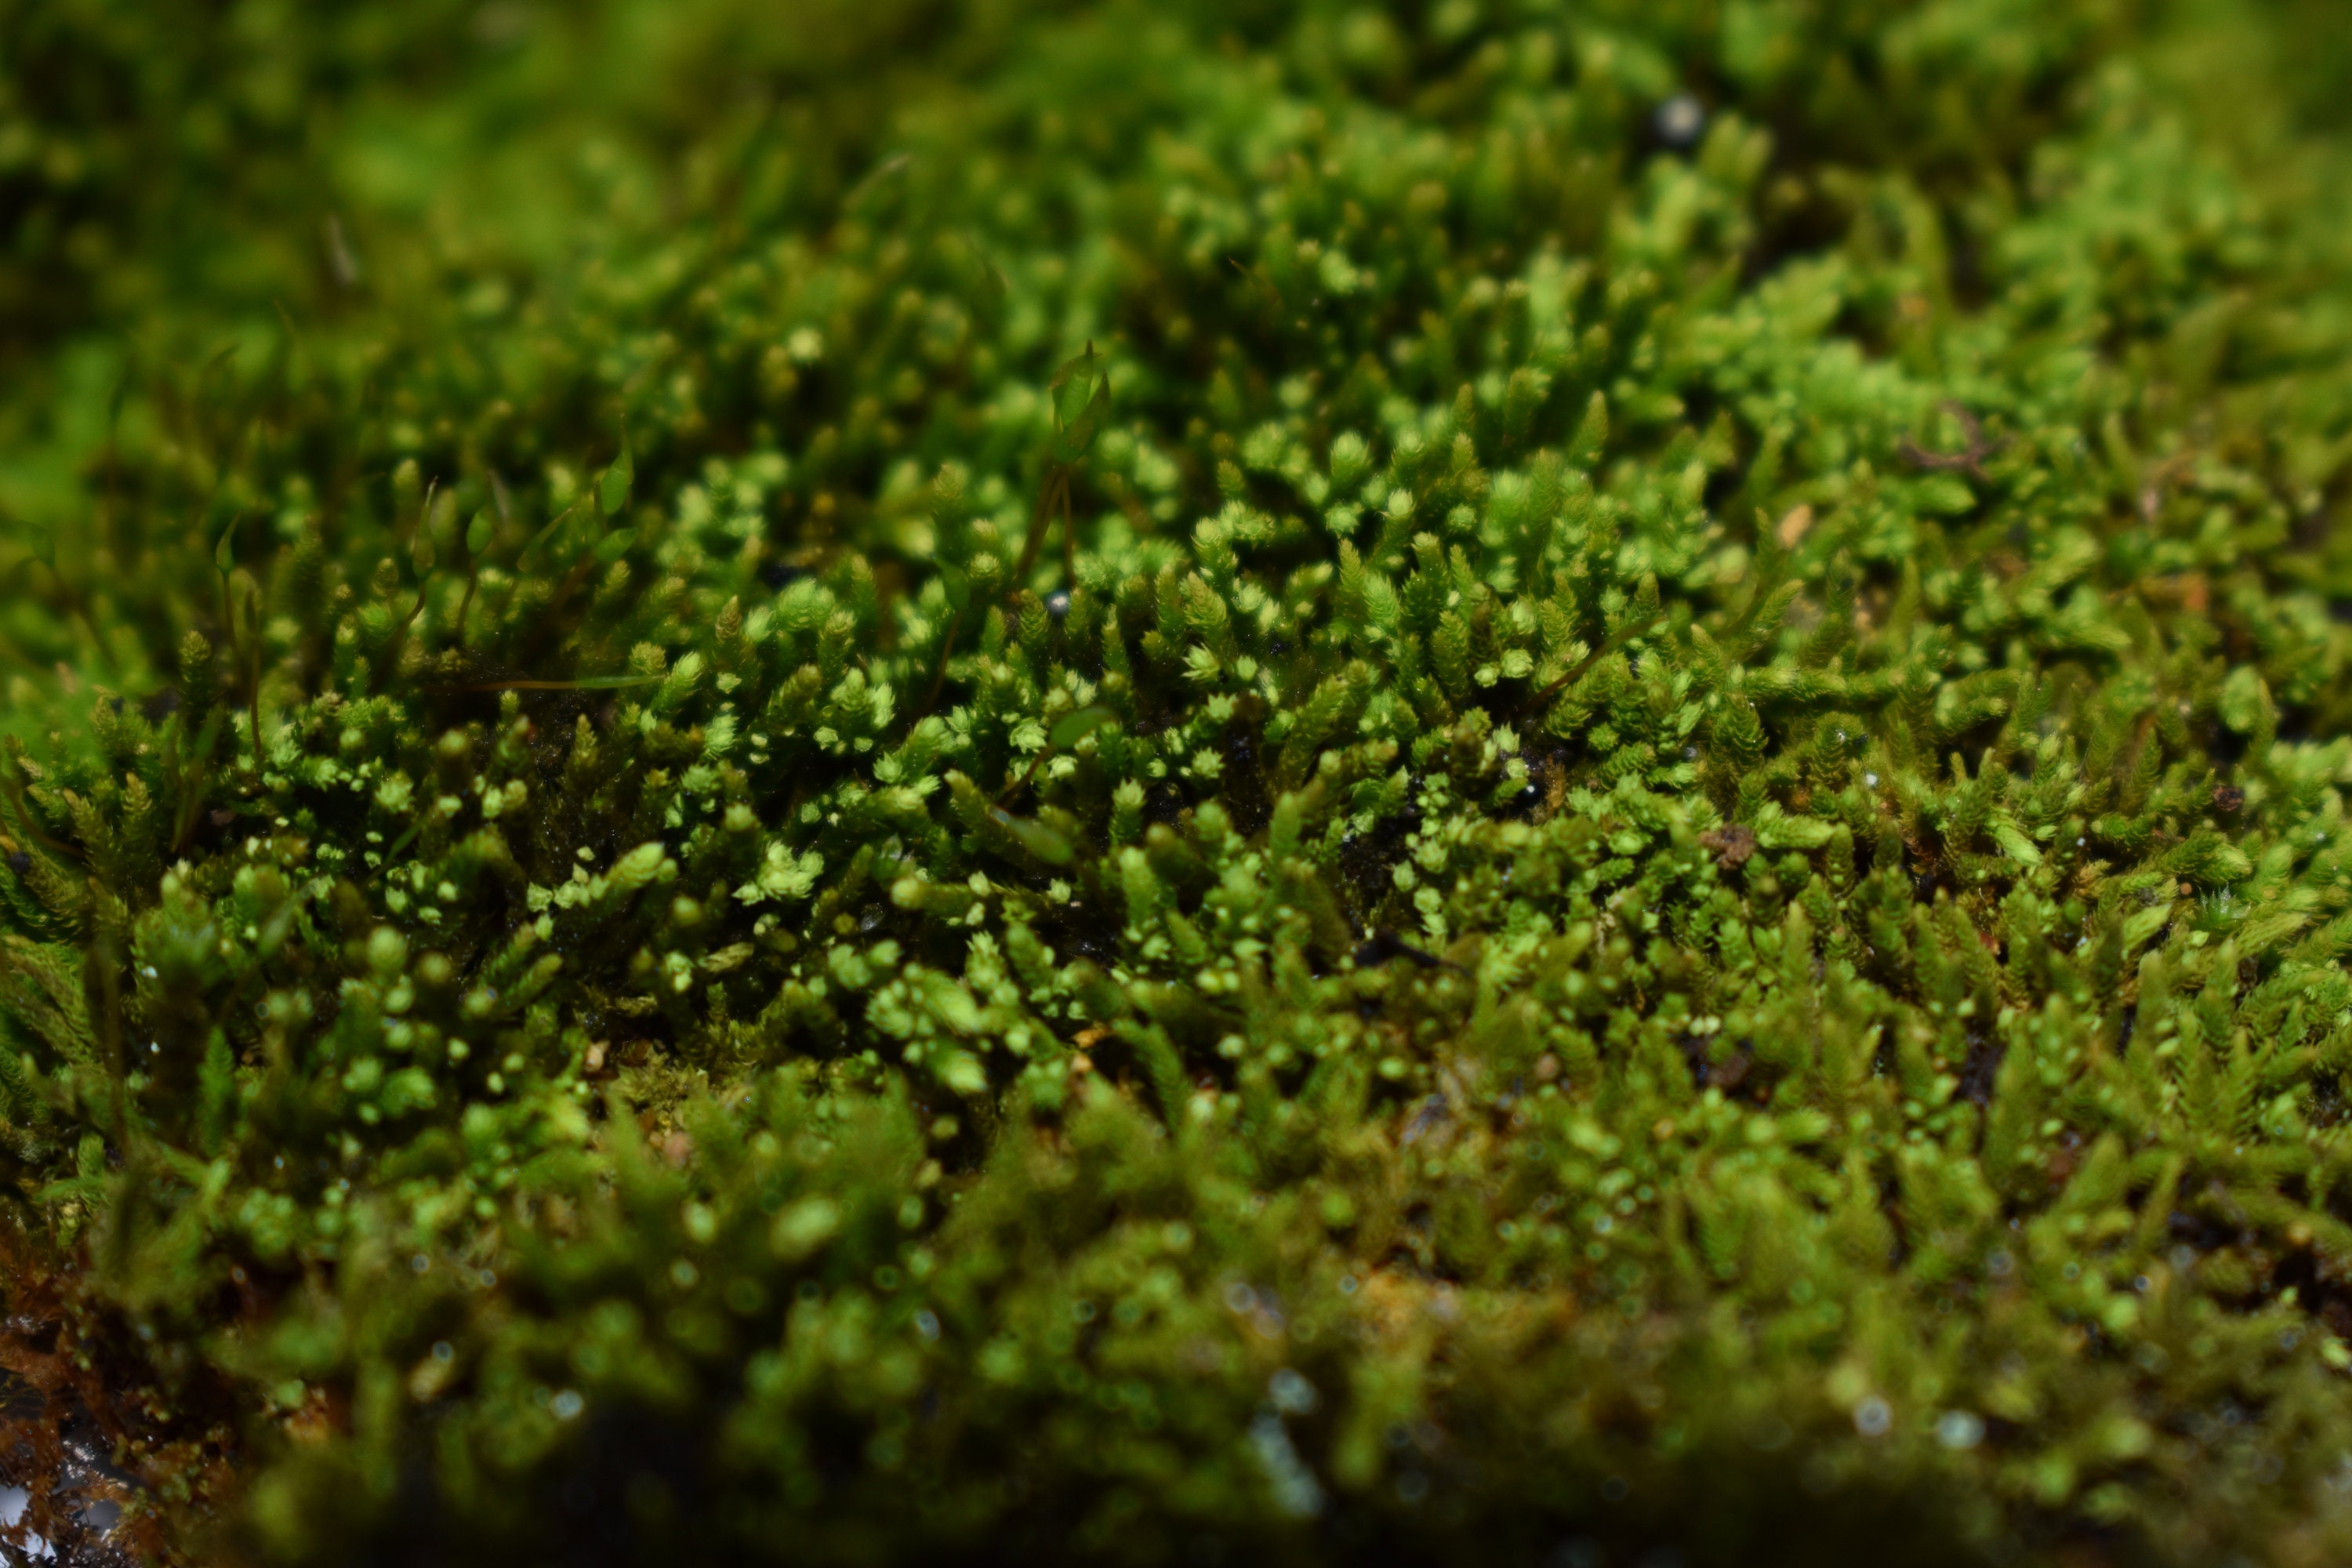 Sphagnum Peat Moss (Organic) 1 Gallon